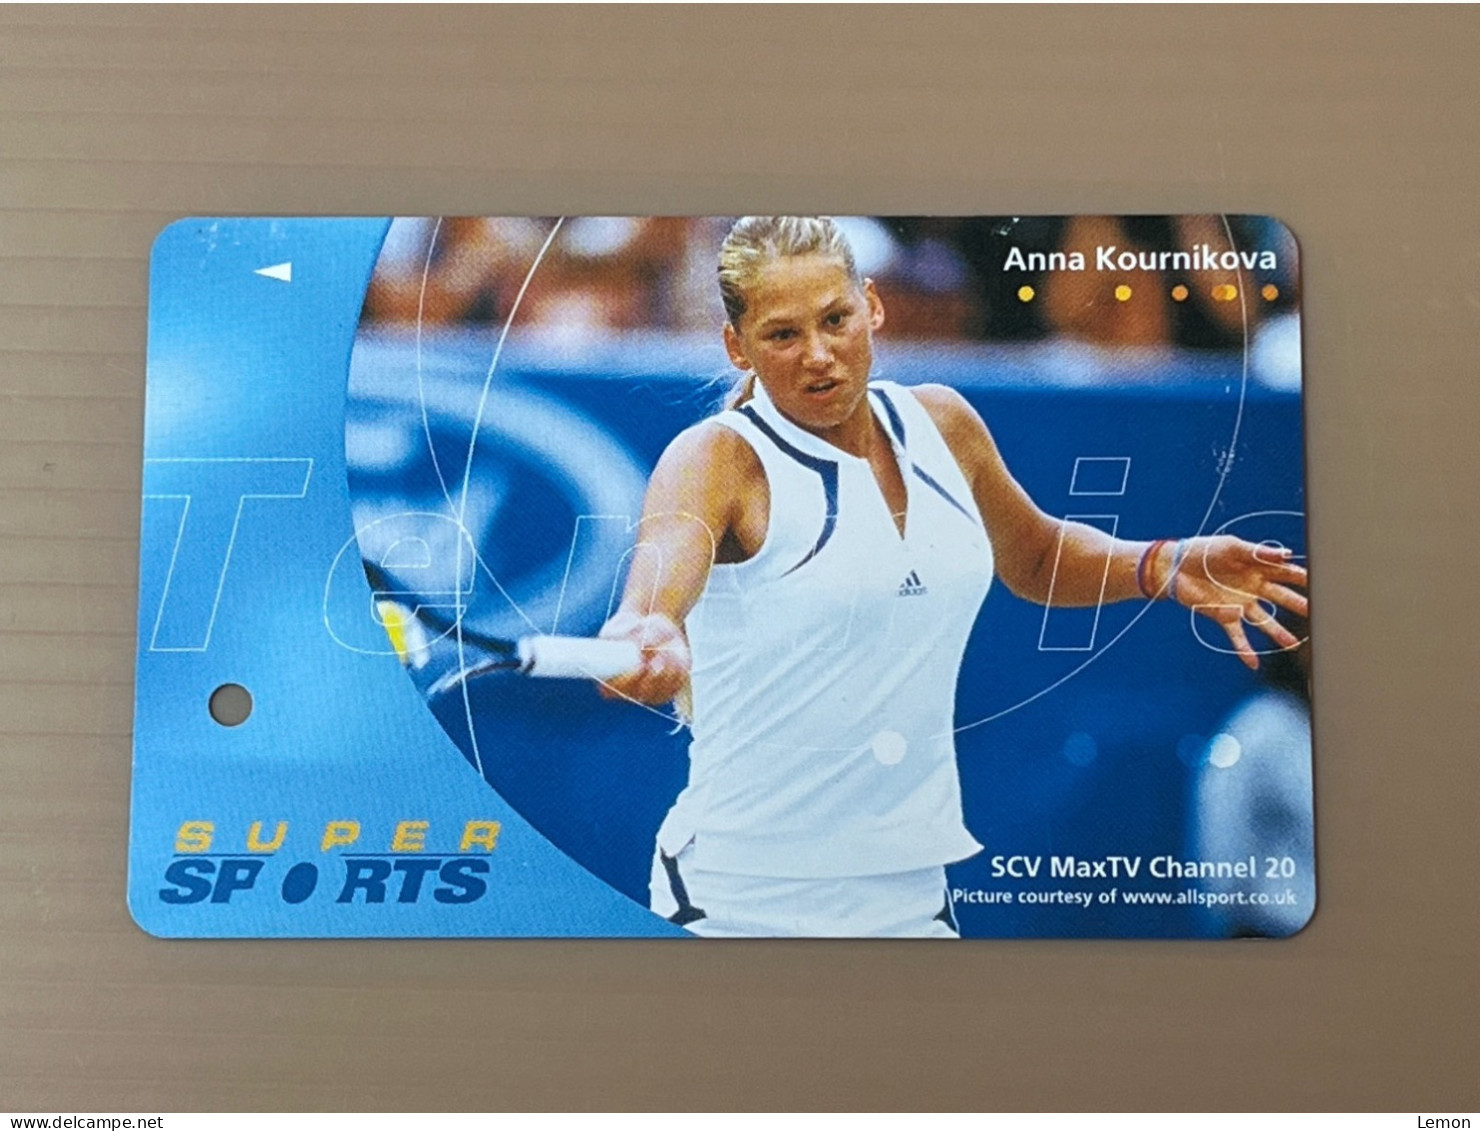 Singapore SMRT TransitLink Metro Train Subway Ticket Card, Tennis Anna Kournikova, Set Of 1 Used Card - Singapore